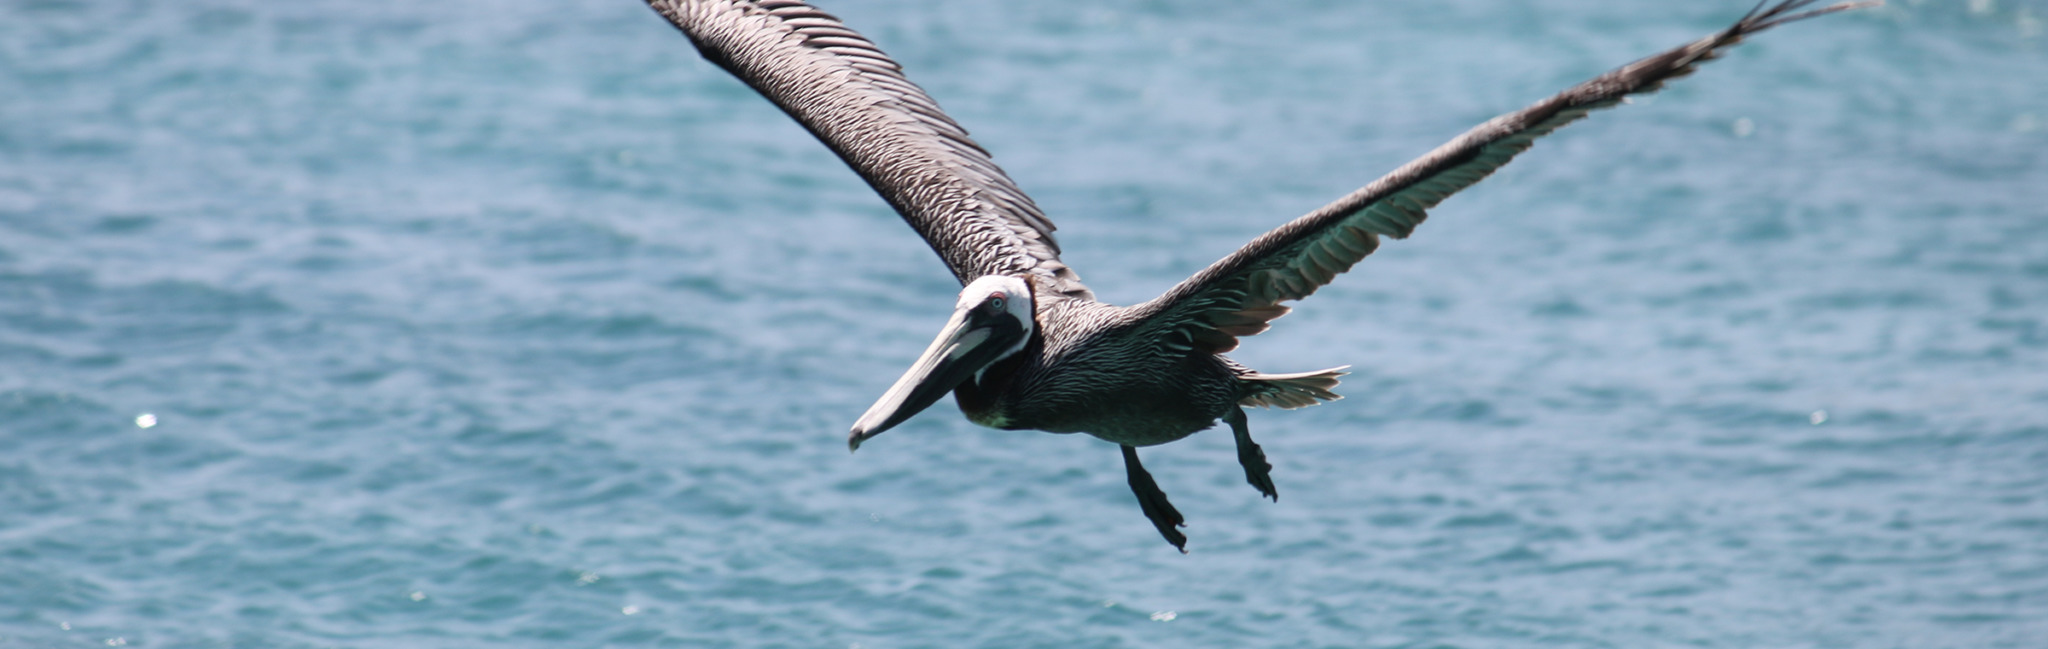 pelican flying above the ocean outside batu villa